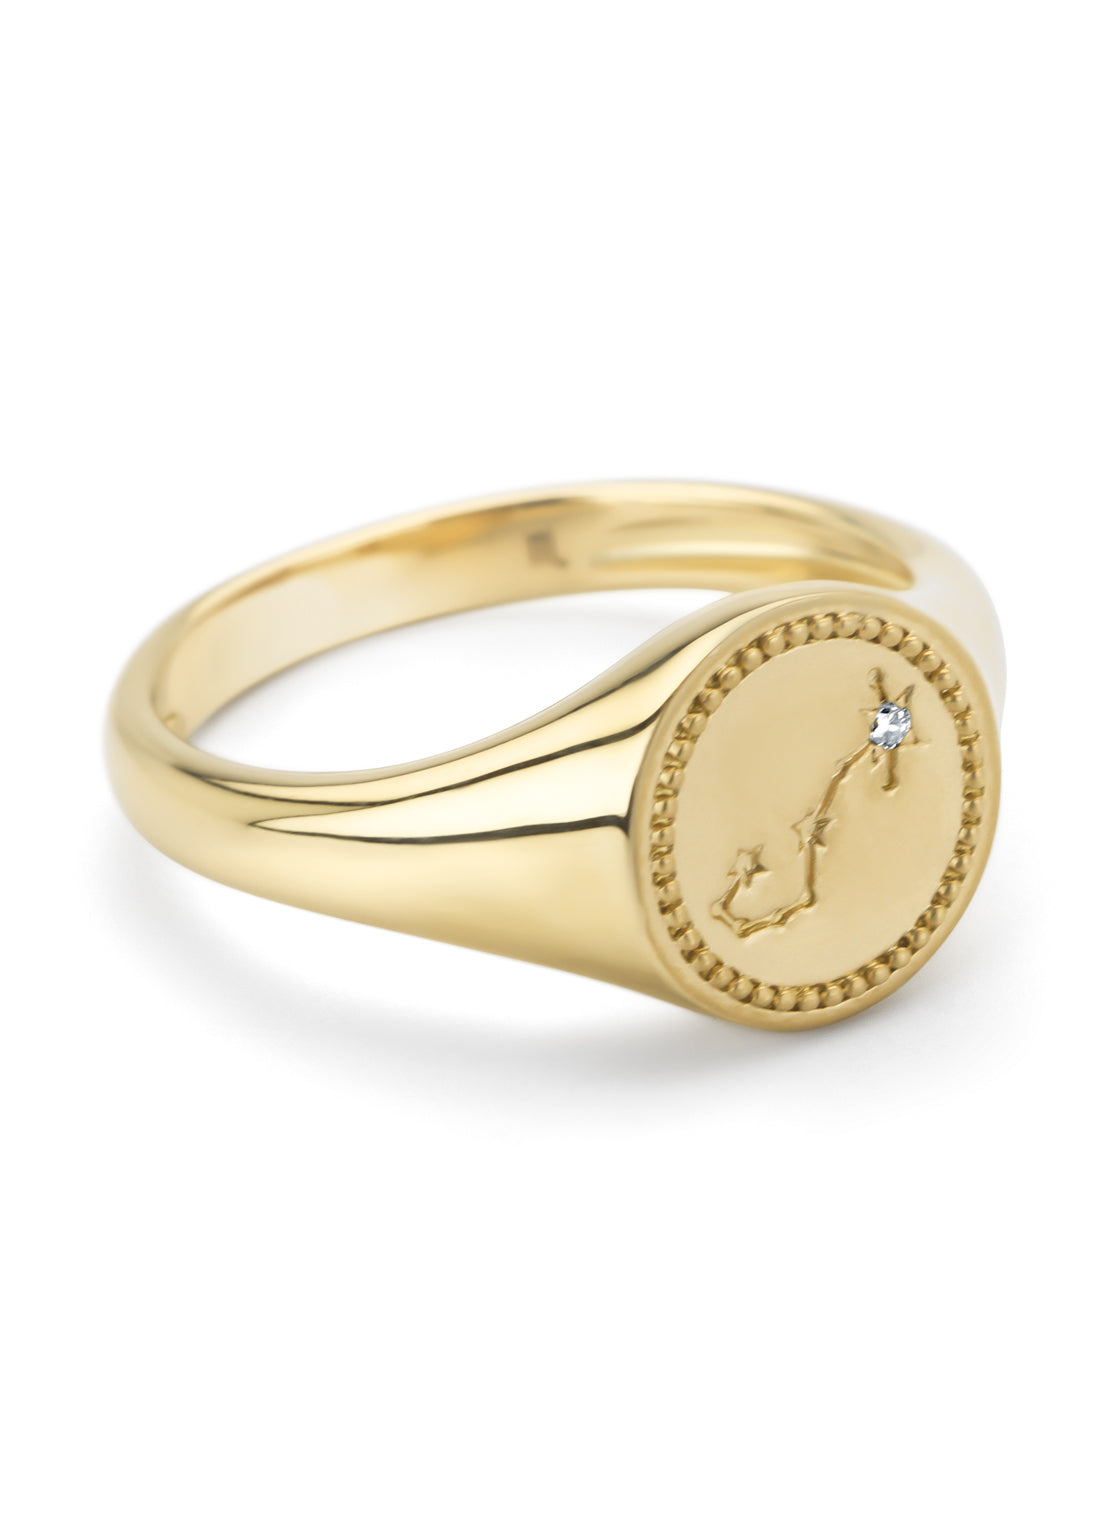 Yellow gold signet ring, zodiac scorpio (scorpion)